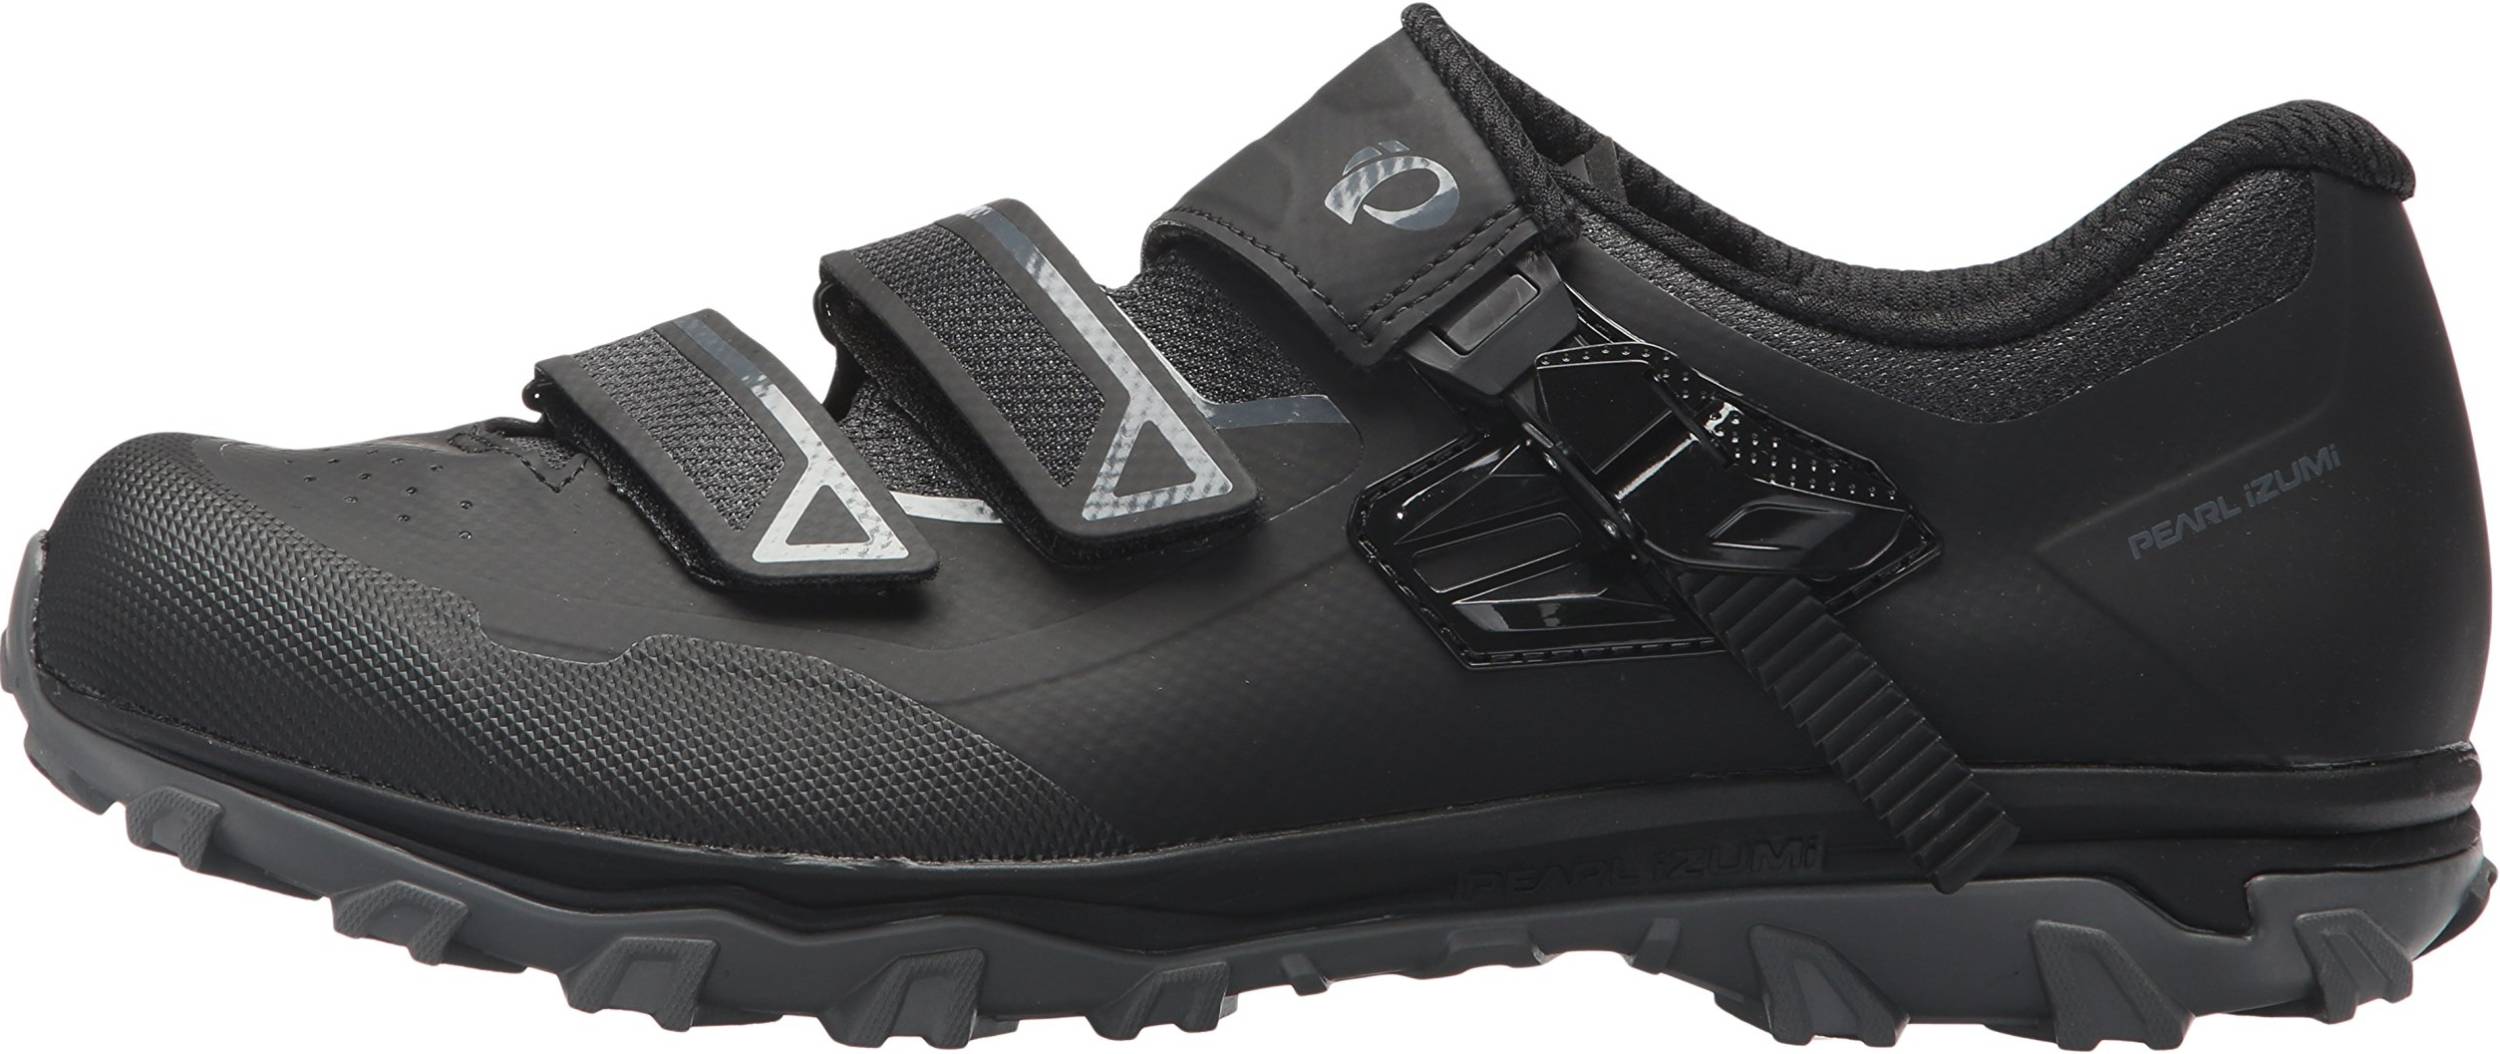 Black Men's Size 45 Details about   Pearl Izumi X-ALP Summit Mountain Bike Shoes 